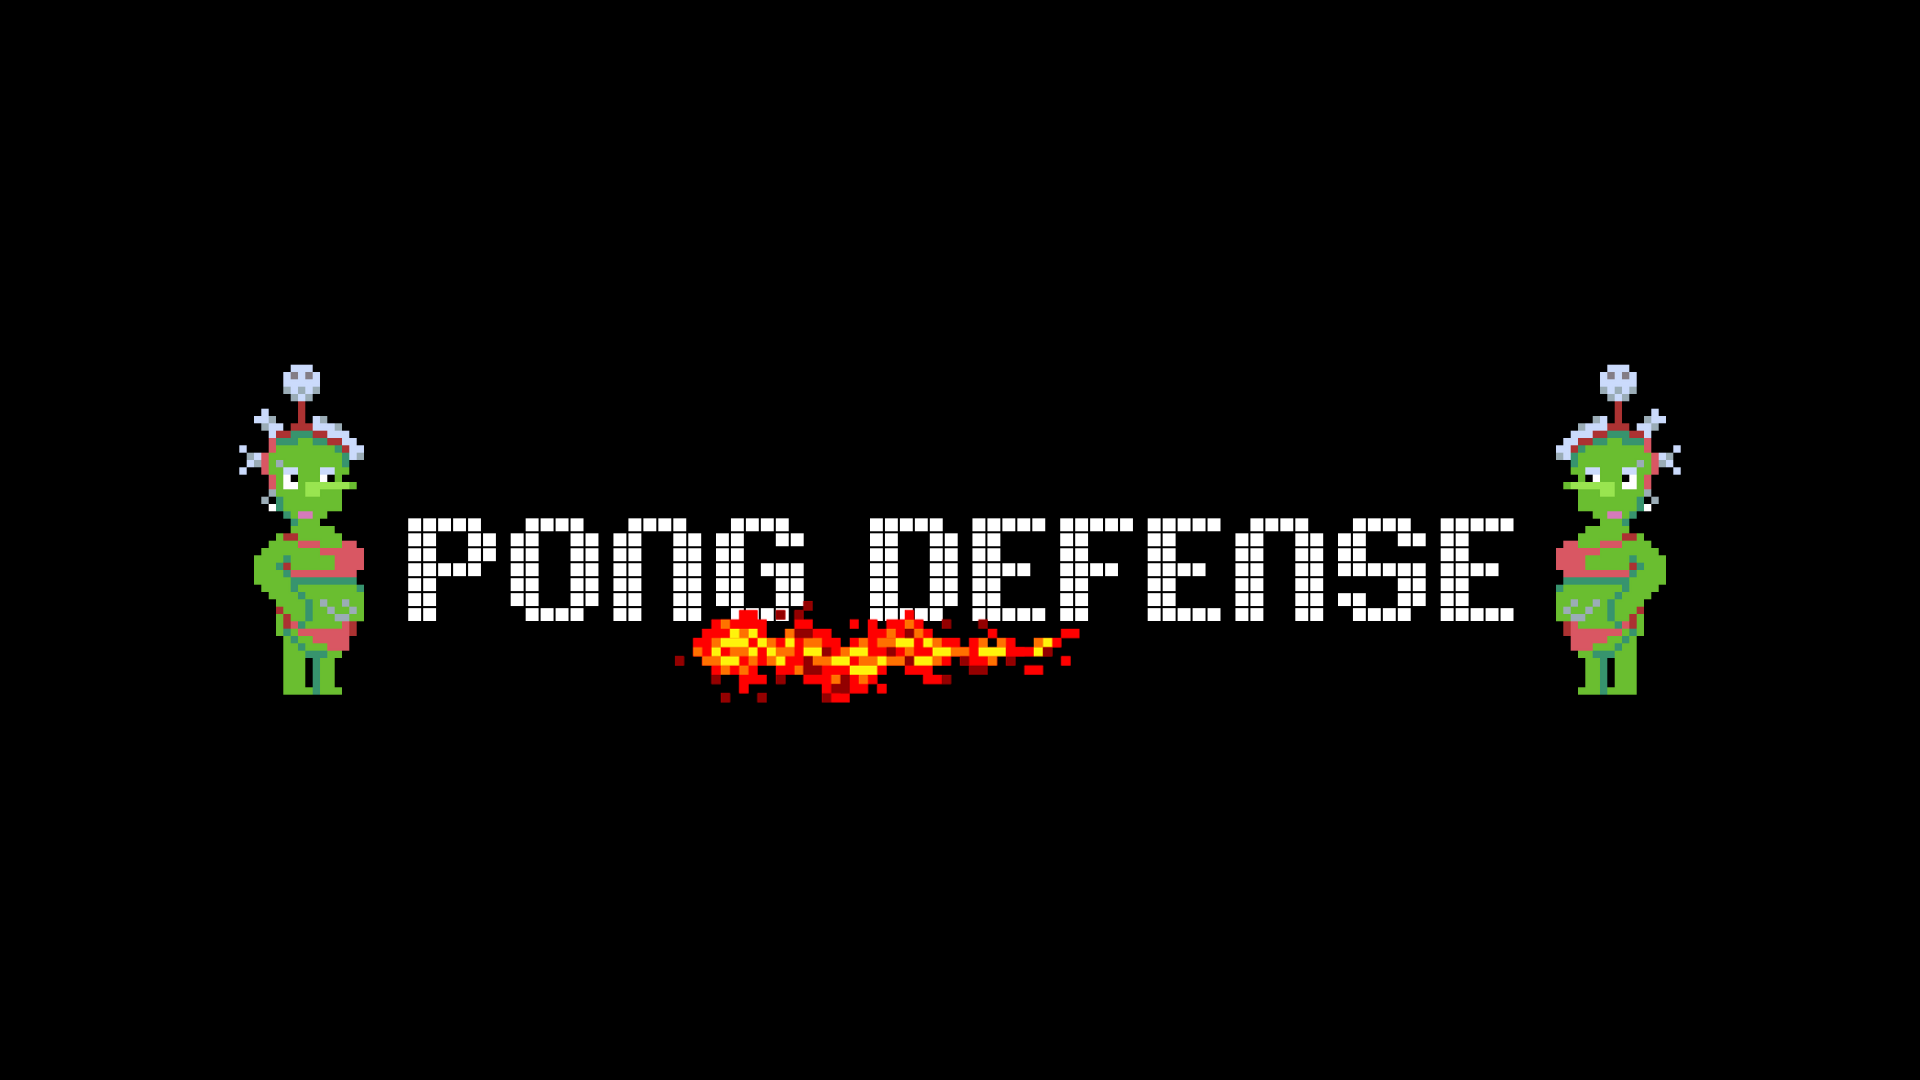 Pong Defense